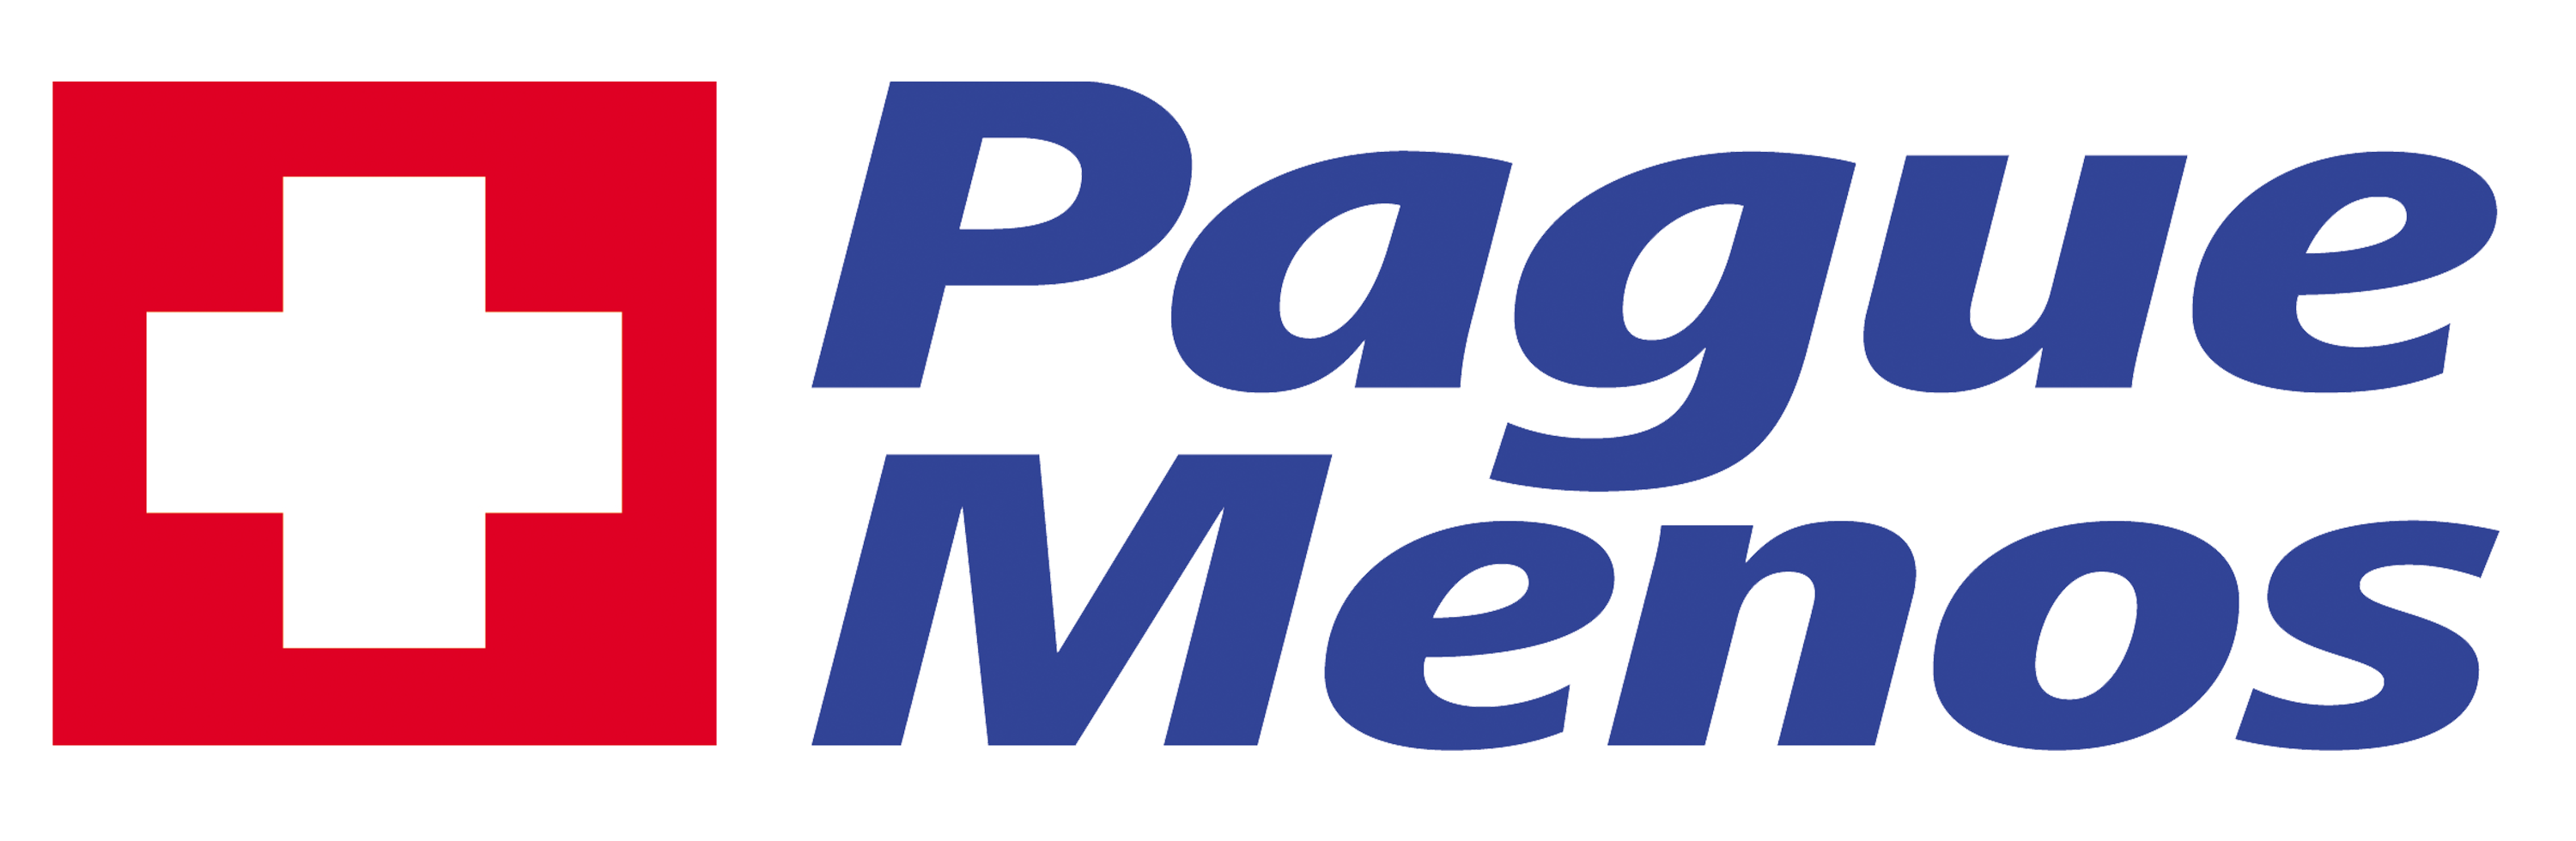 Farmacia Pague Menos - Platina - MG